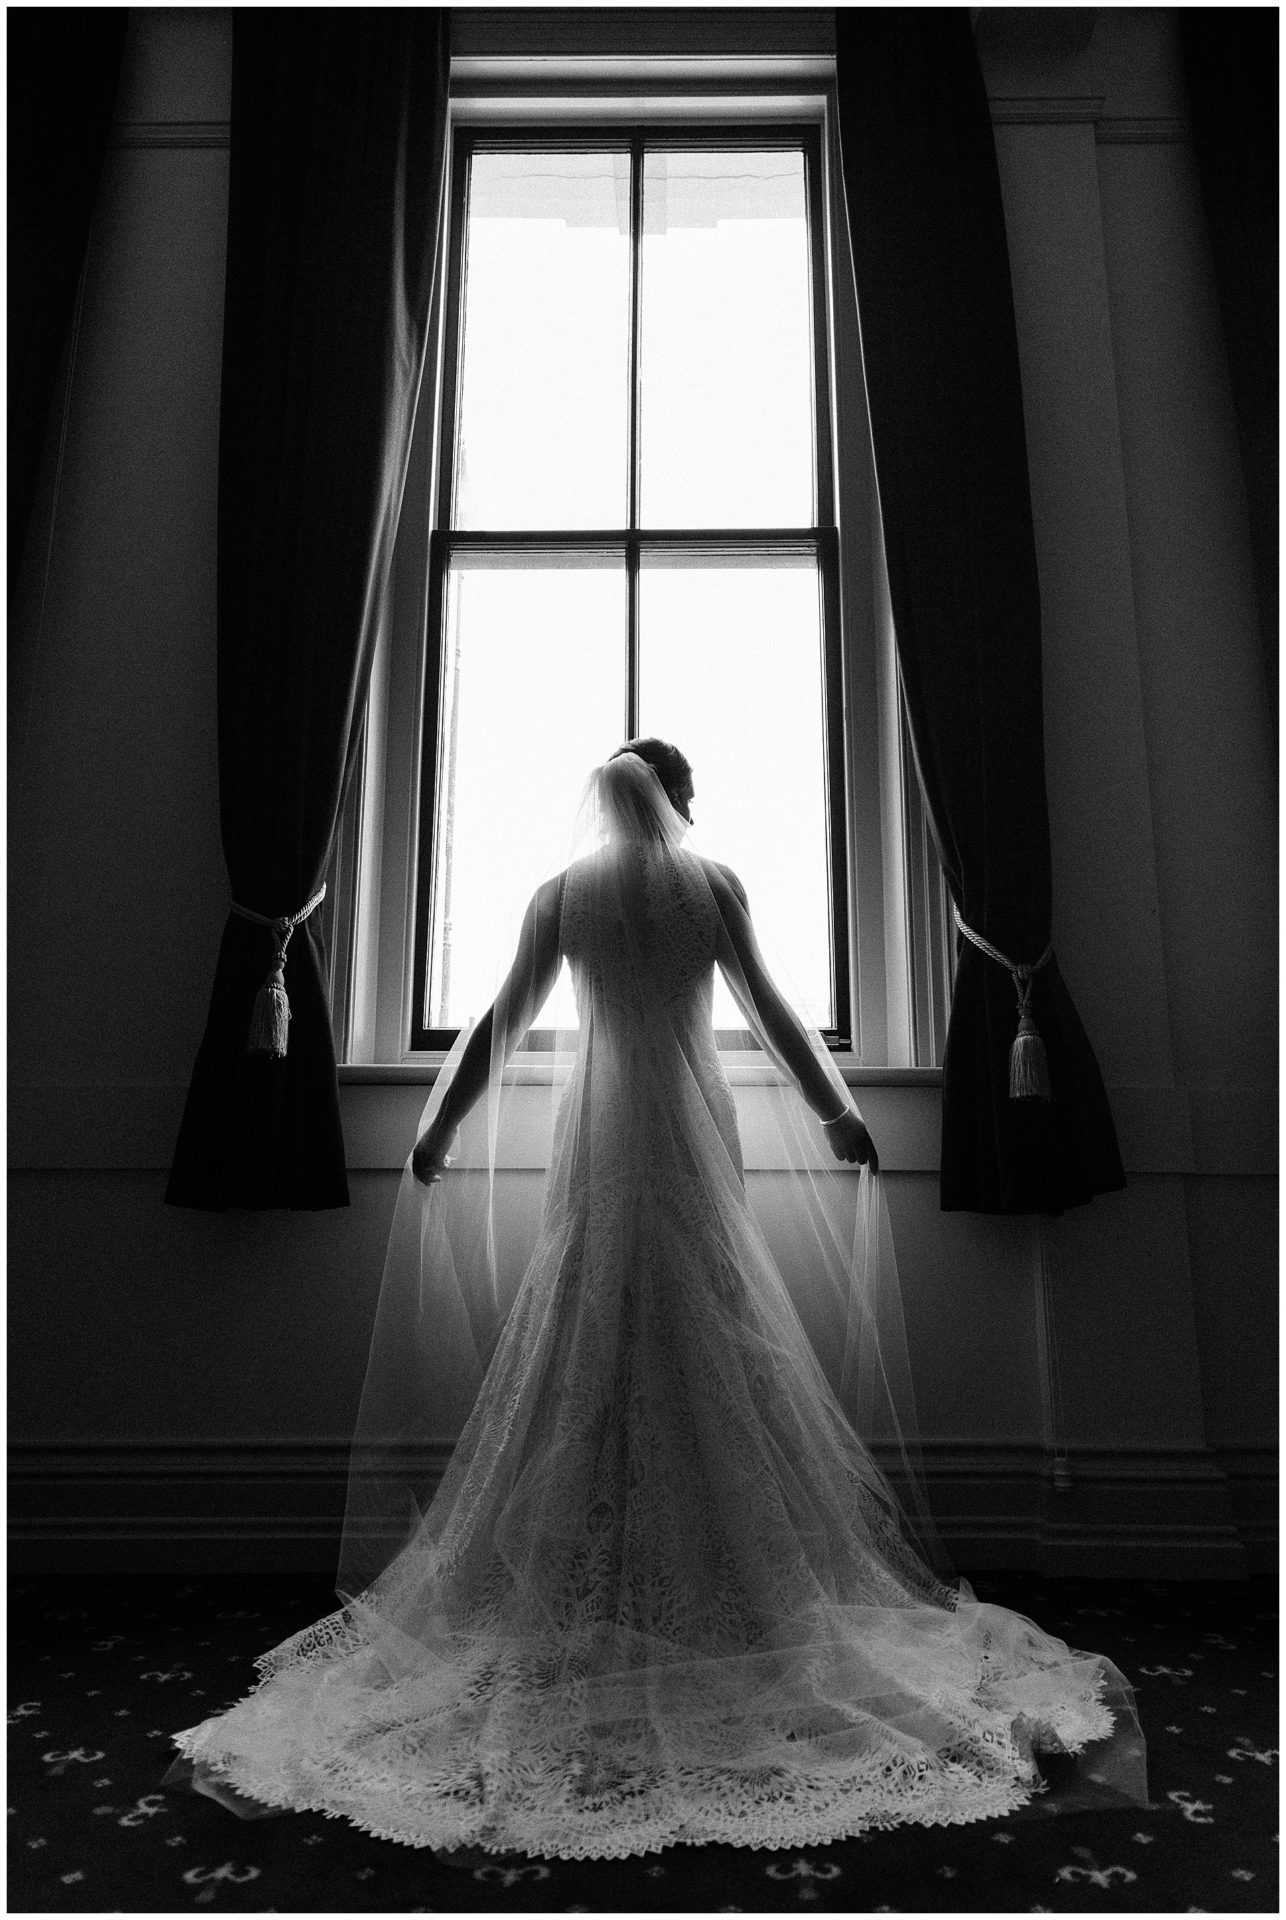 Invercargill-civic-theatre-wedding-photographer-southland